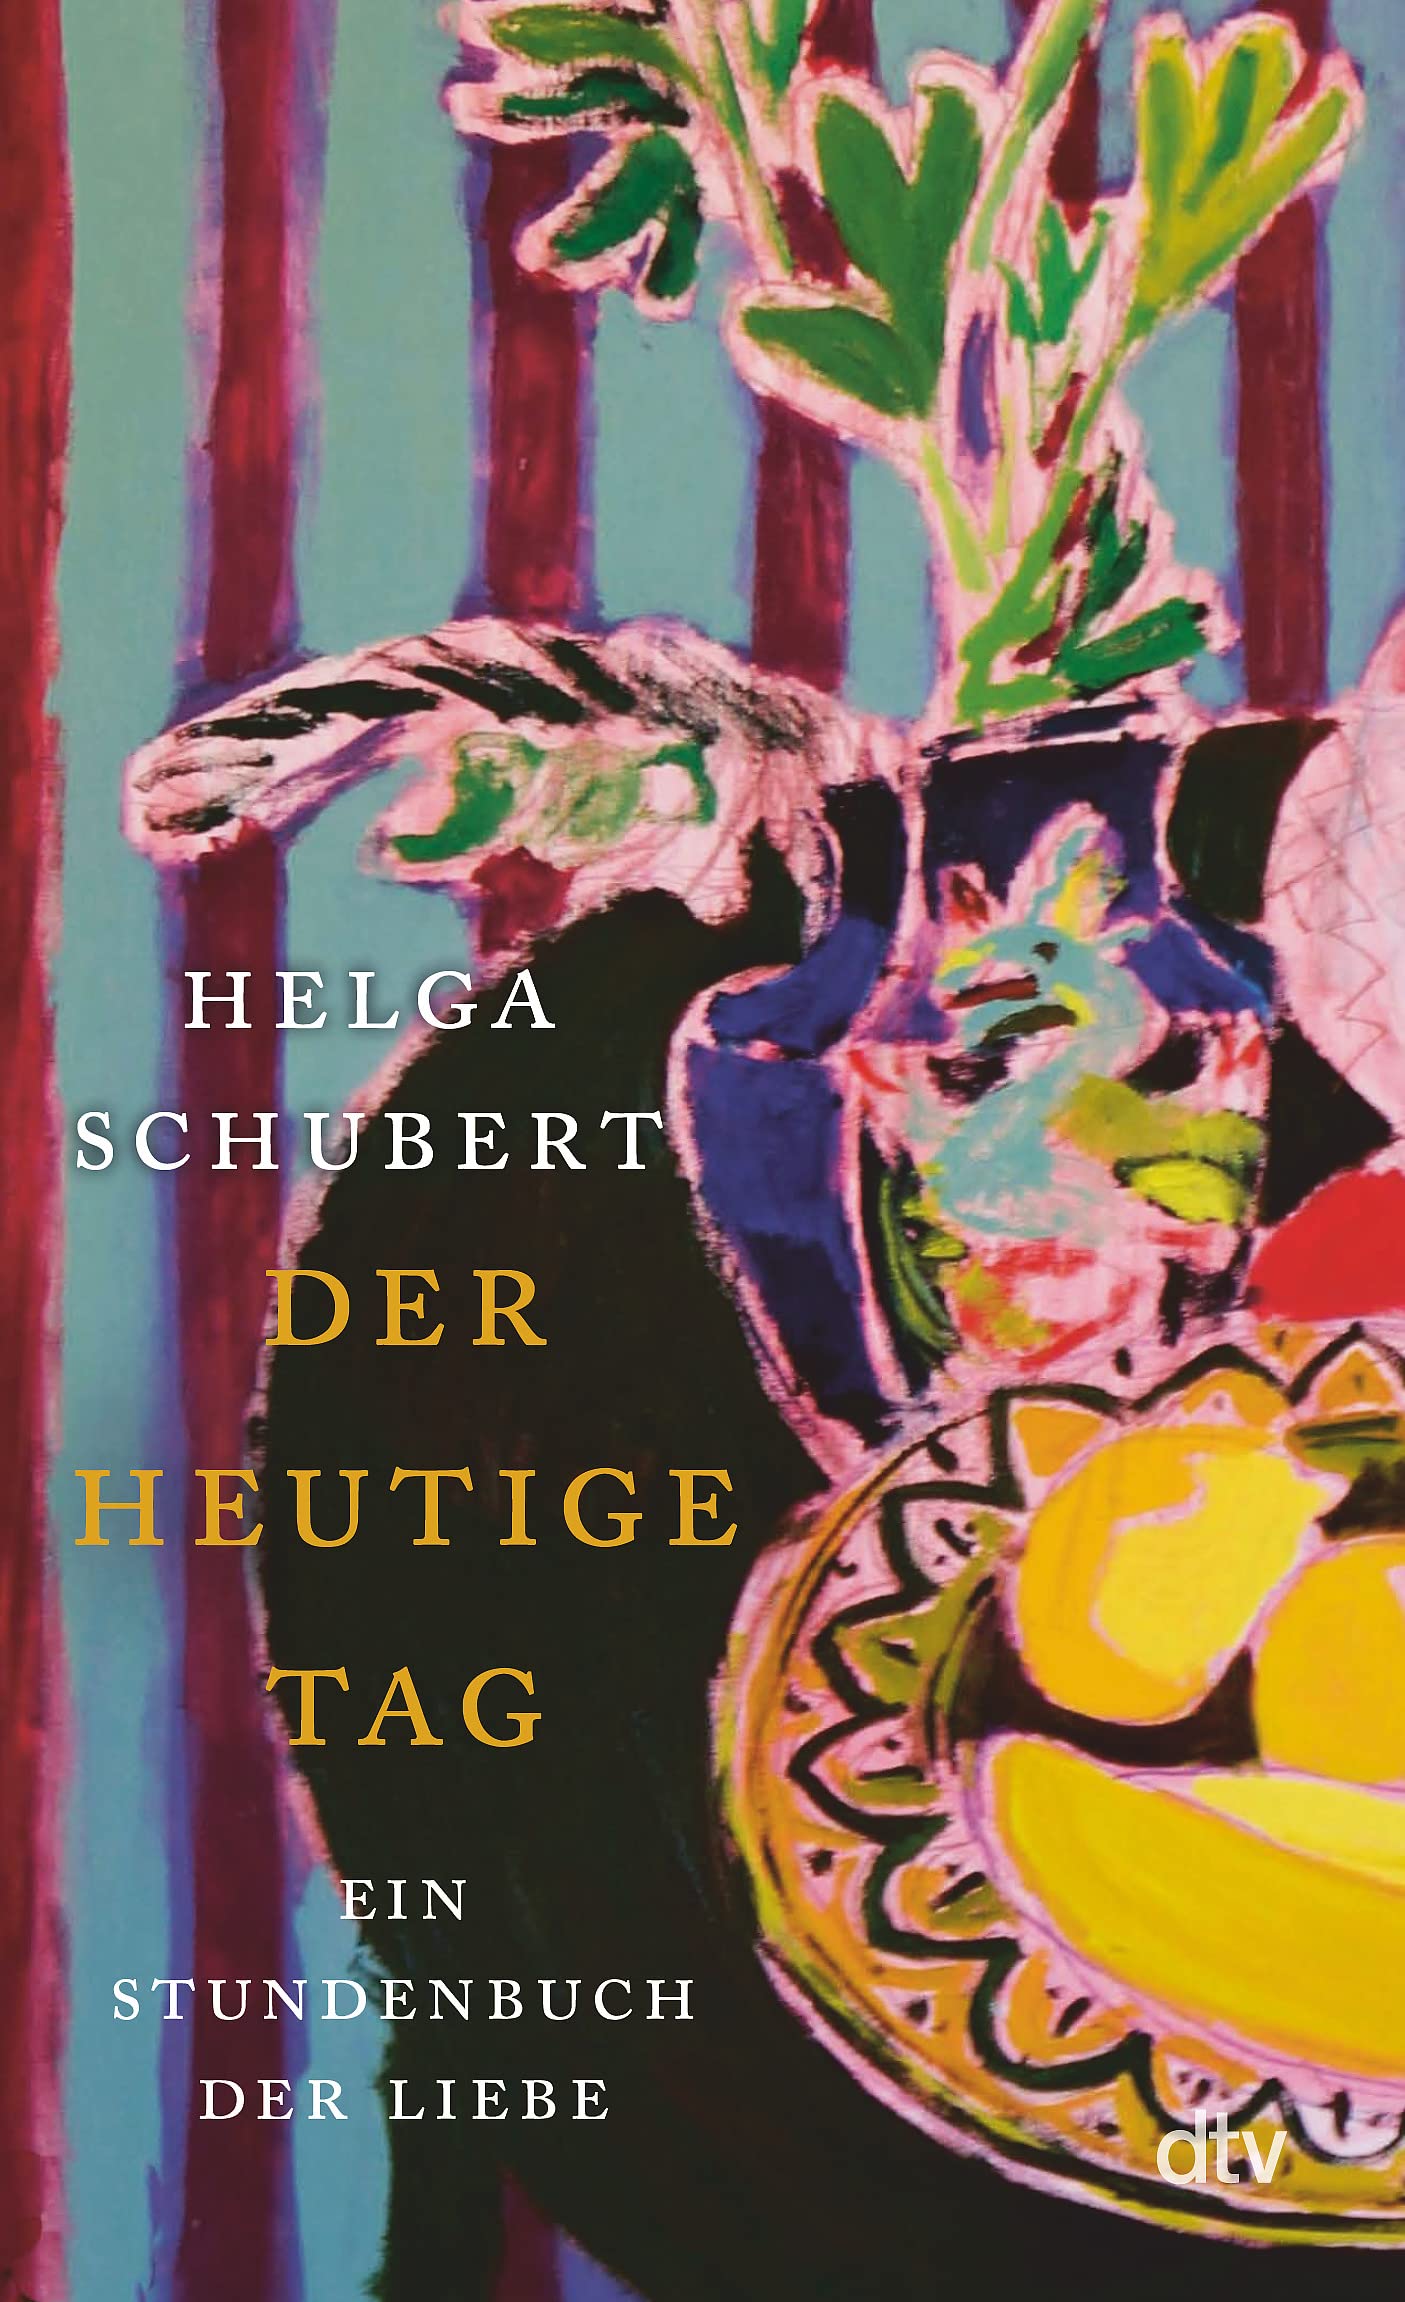 Helga Schubert – Der heutige Tag